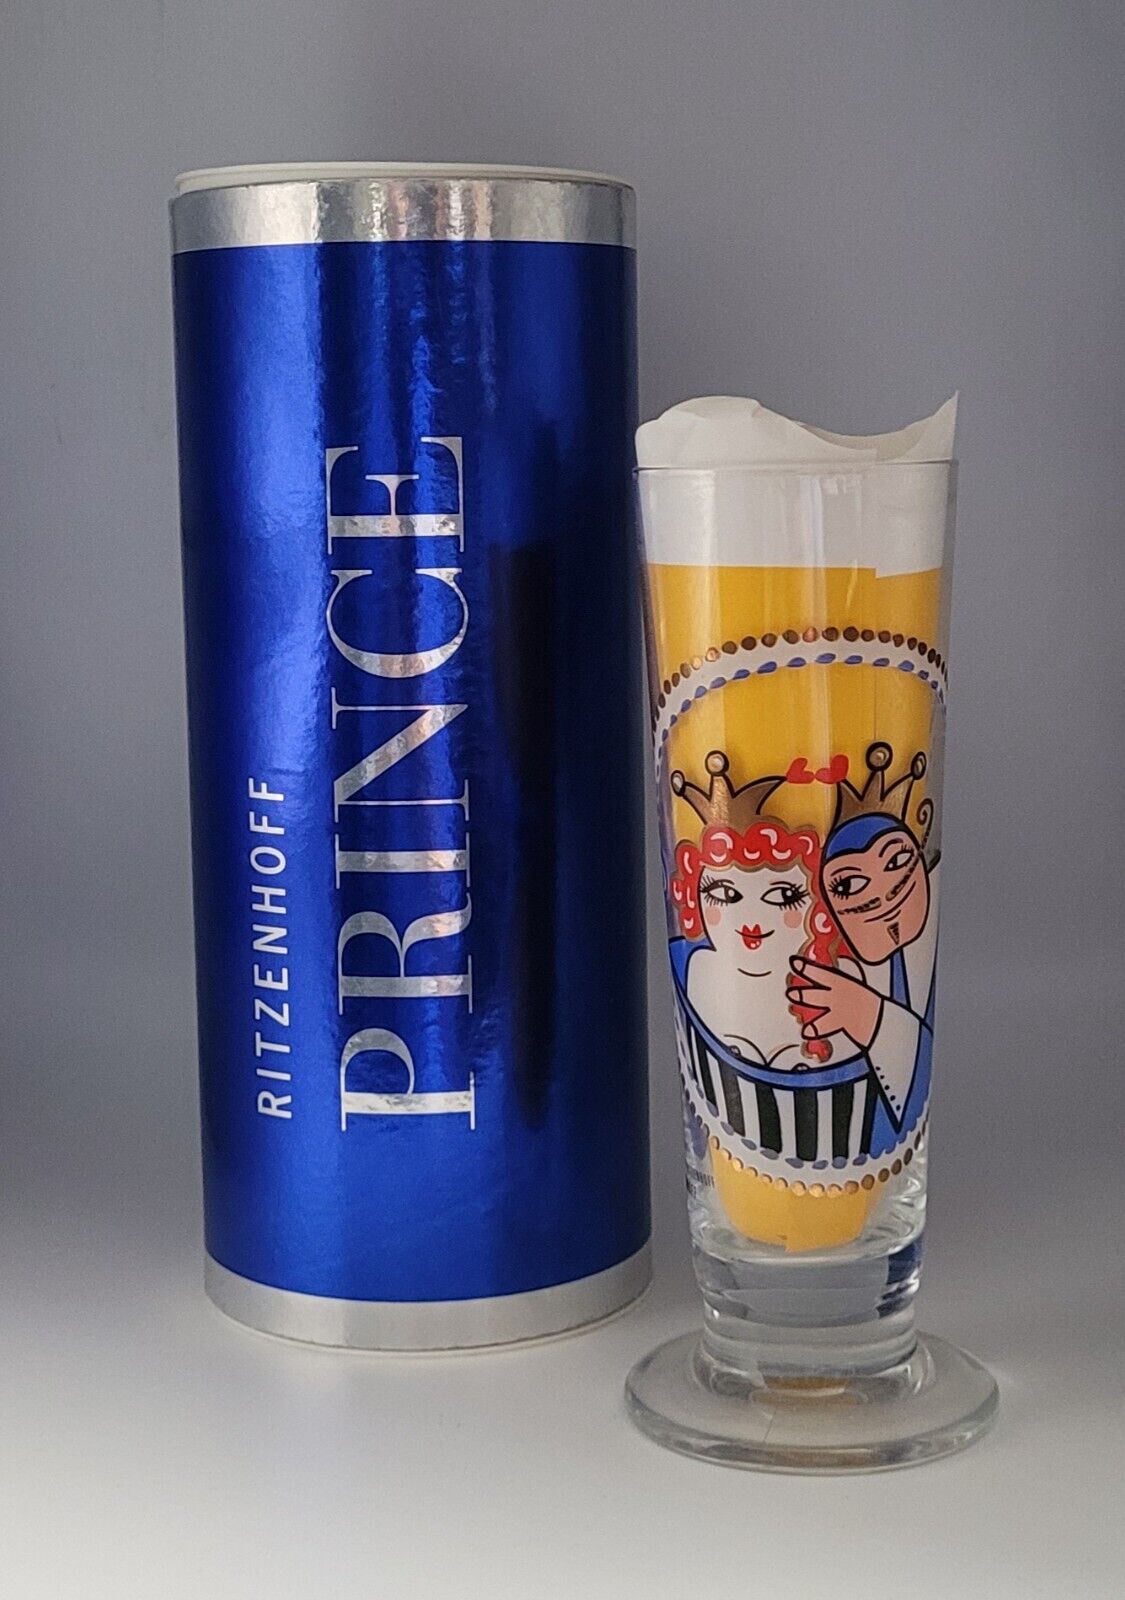 RITZENHOFF Prince Beer Glass By PETRA PESCHKES